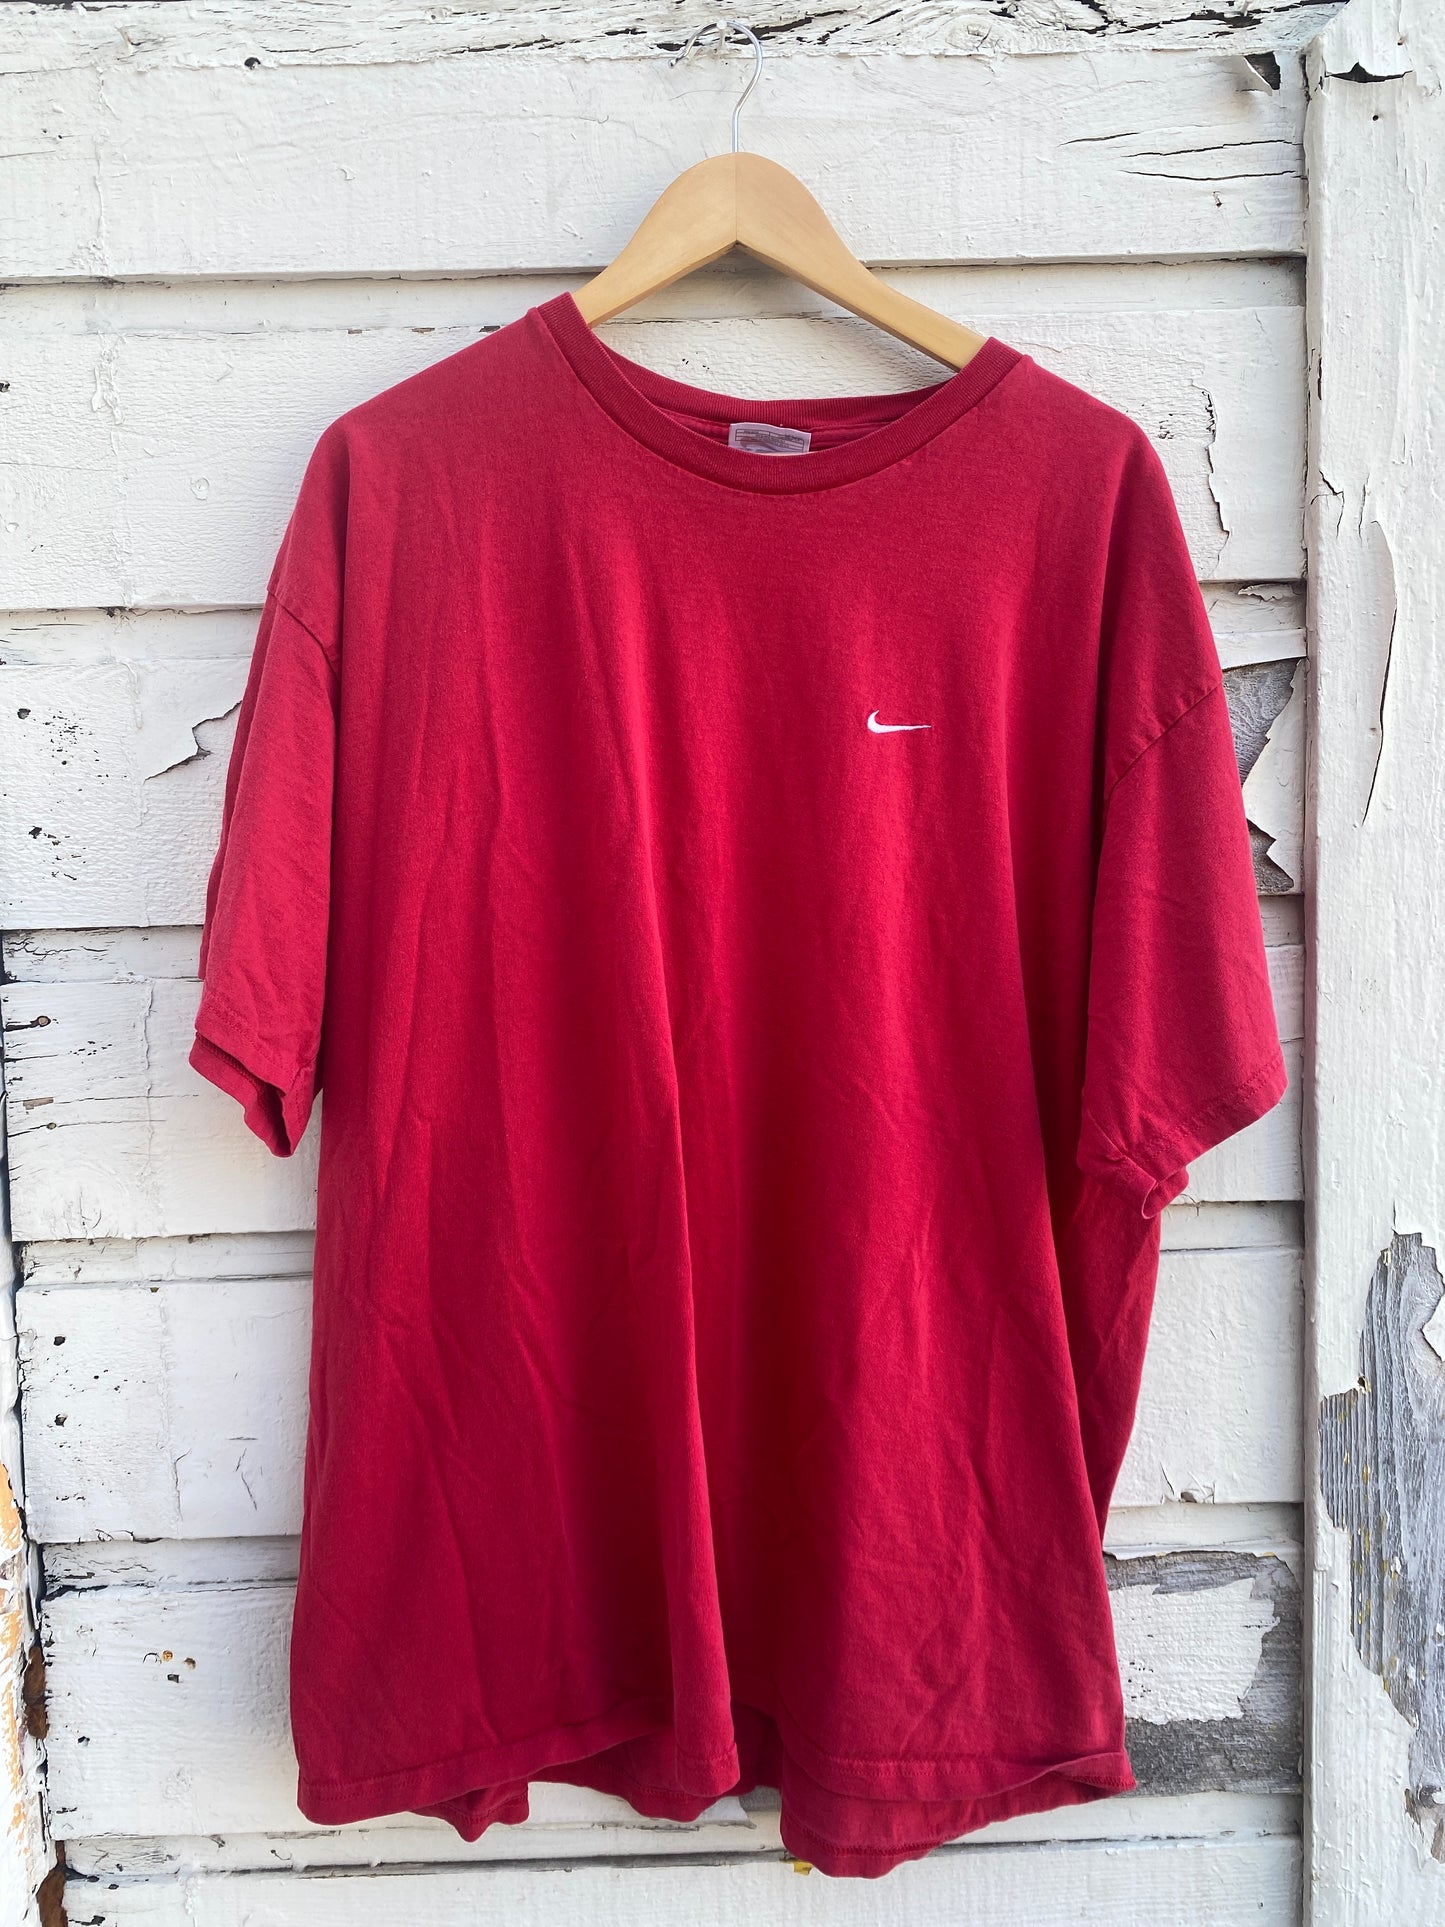 Red Nike embroidered mini swoosh XXL